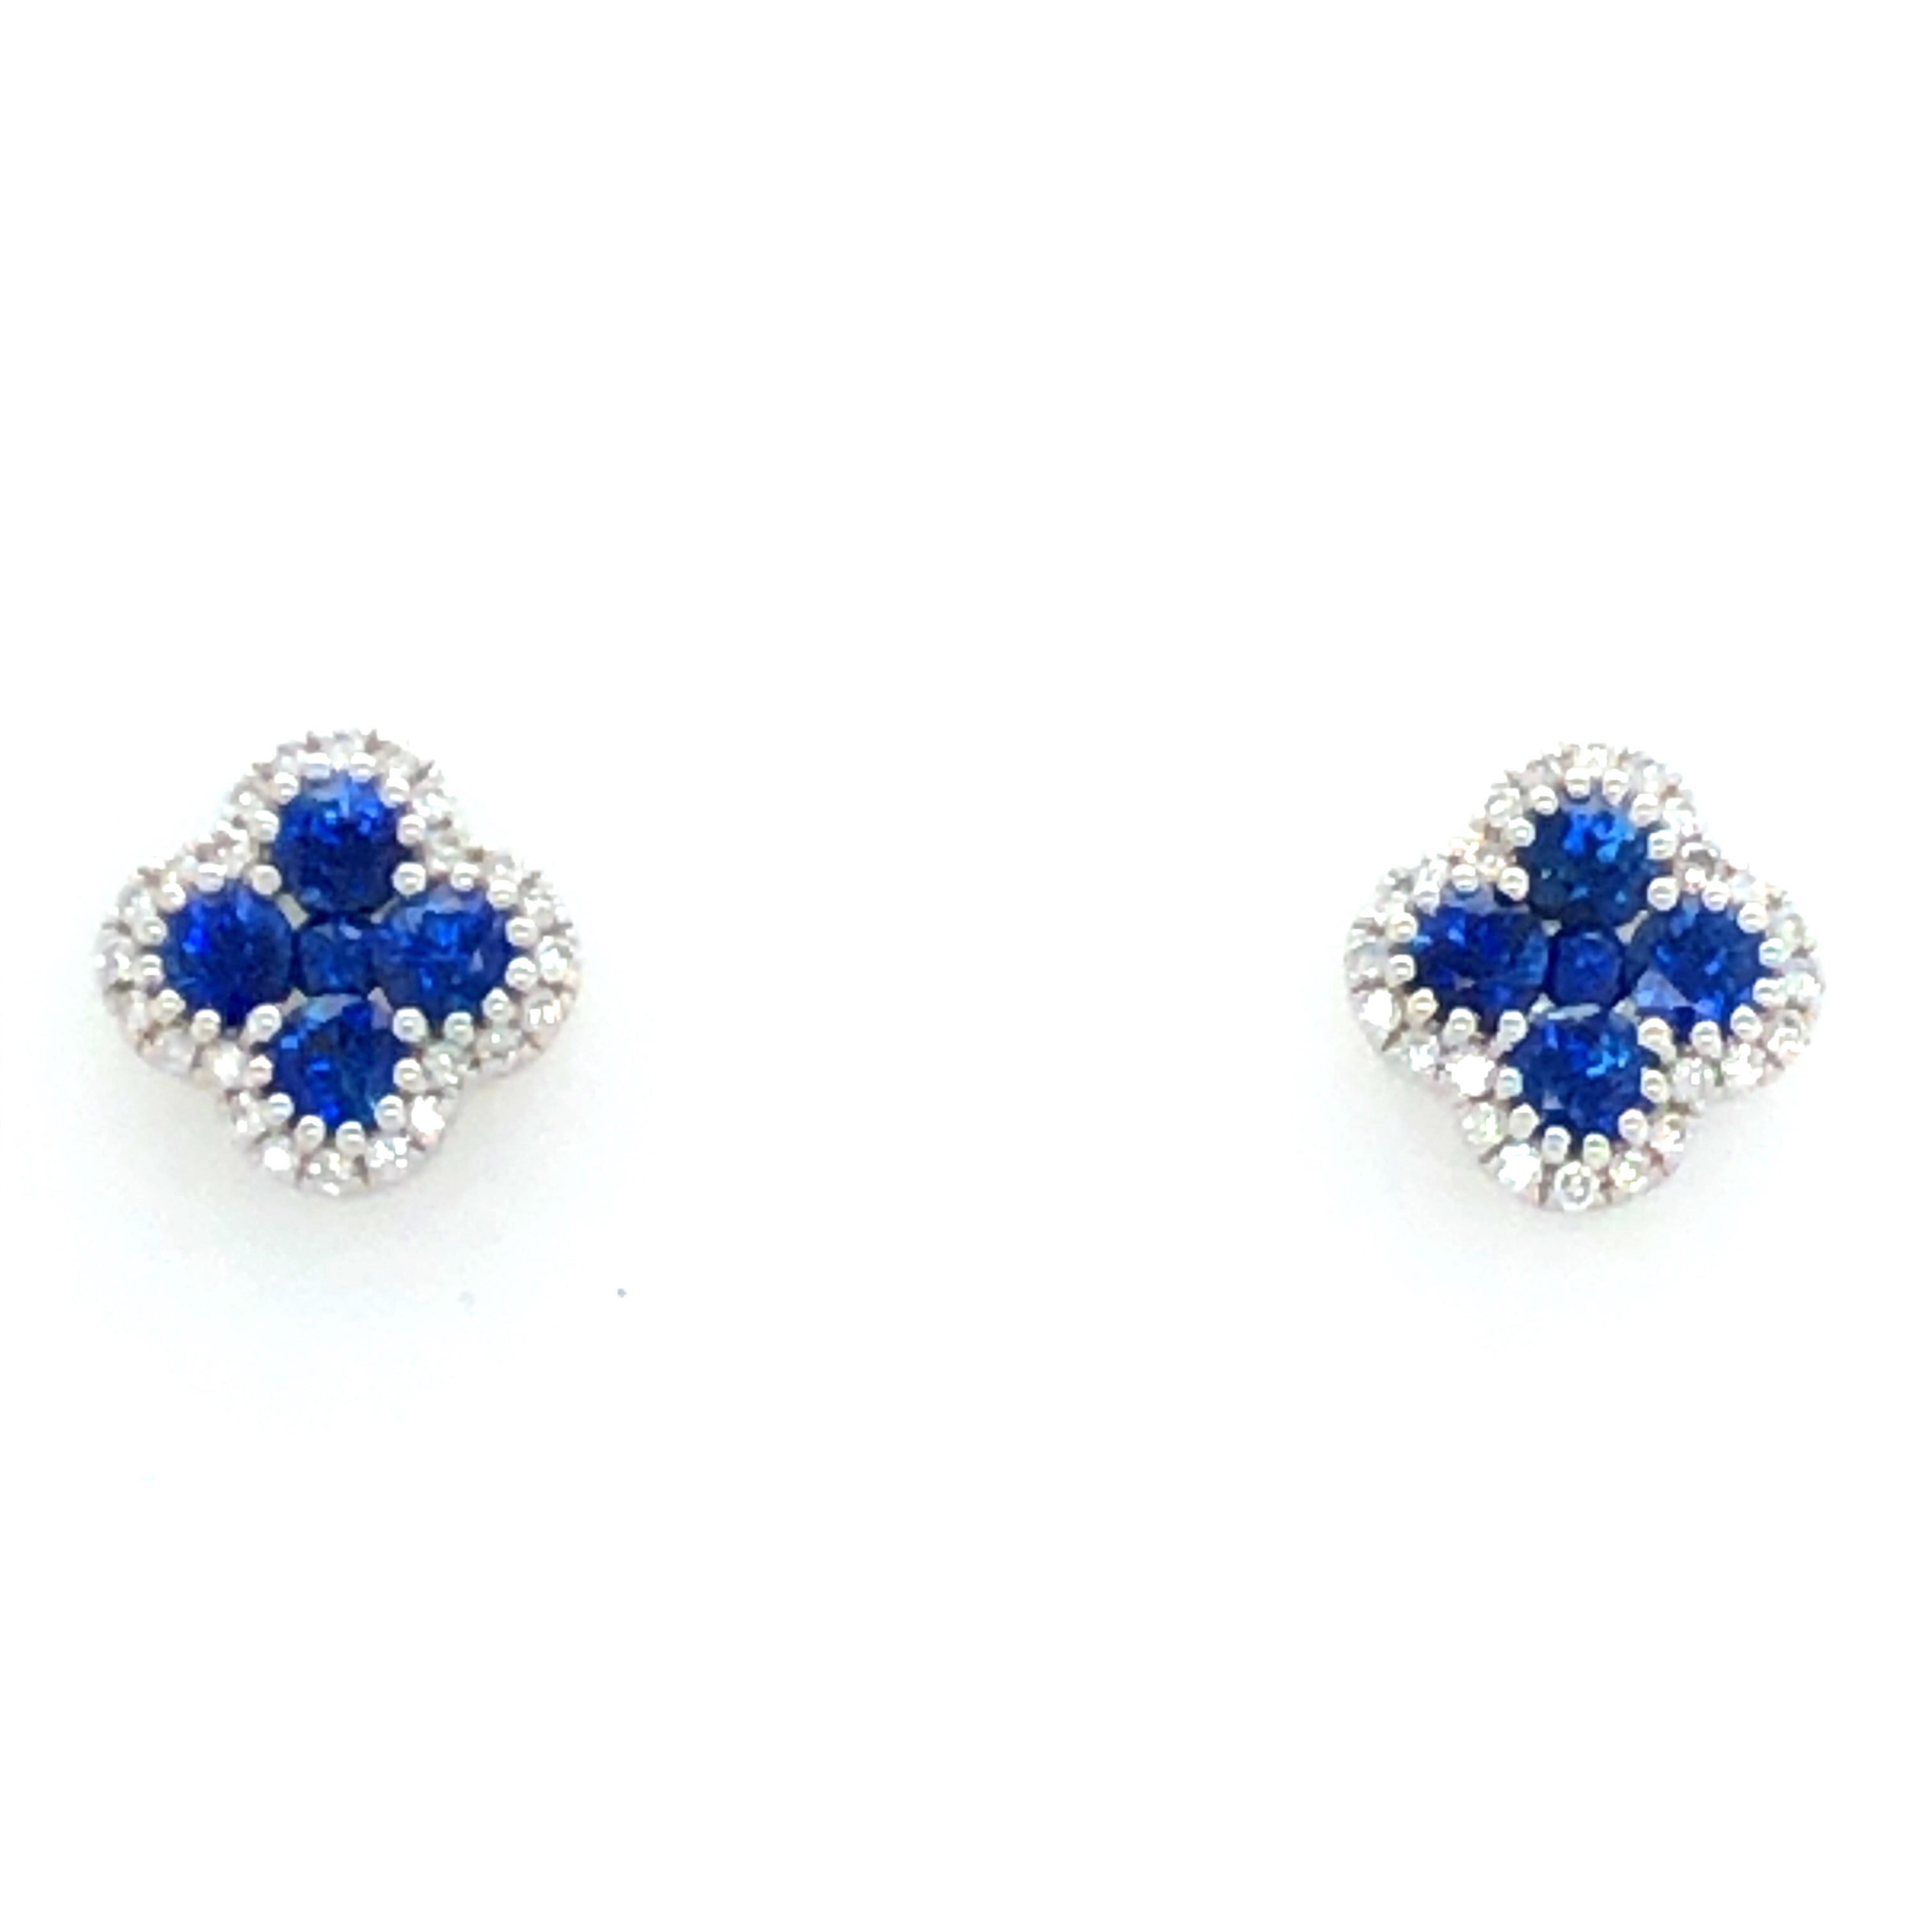 Stud Diamonds Earring - Colored Stone Earrings